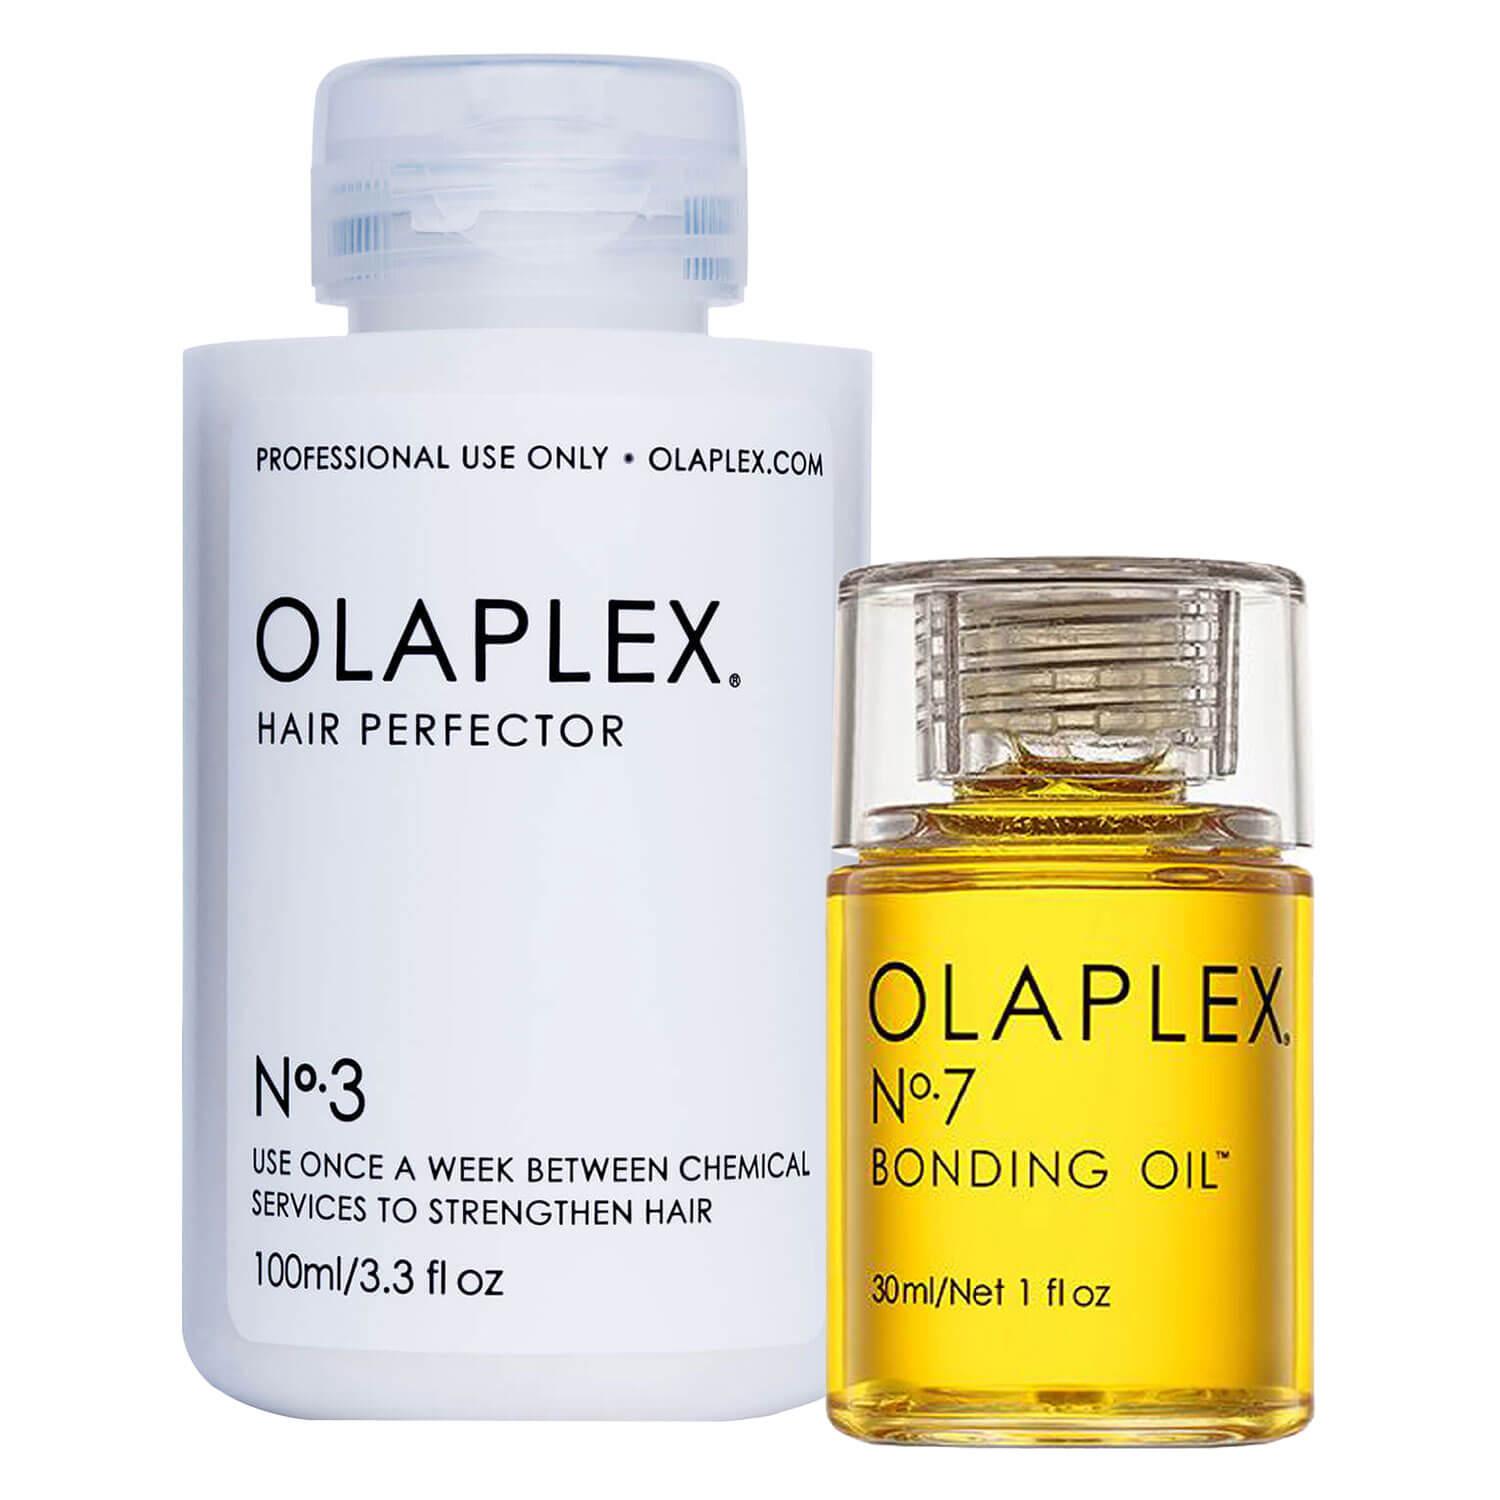 Olaplex - Bonding Oil No. 7 + Olaplex - Hair Perfector No. 3 Special